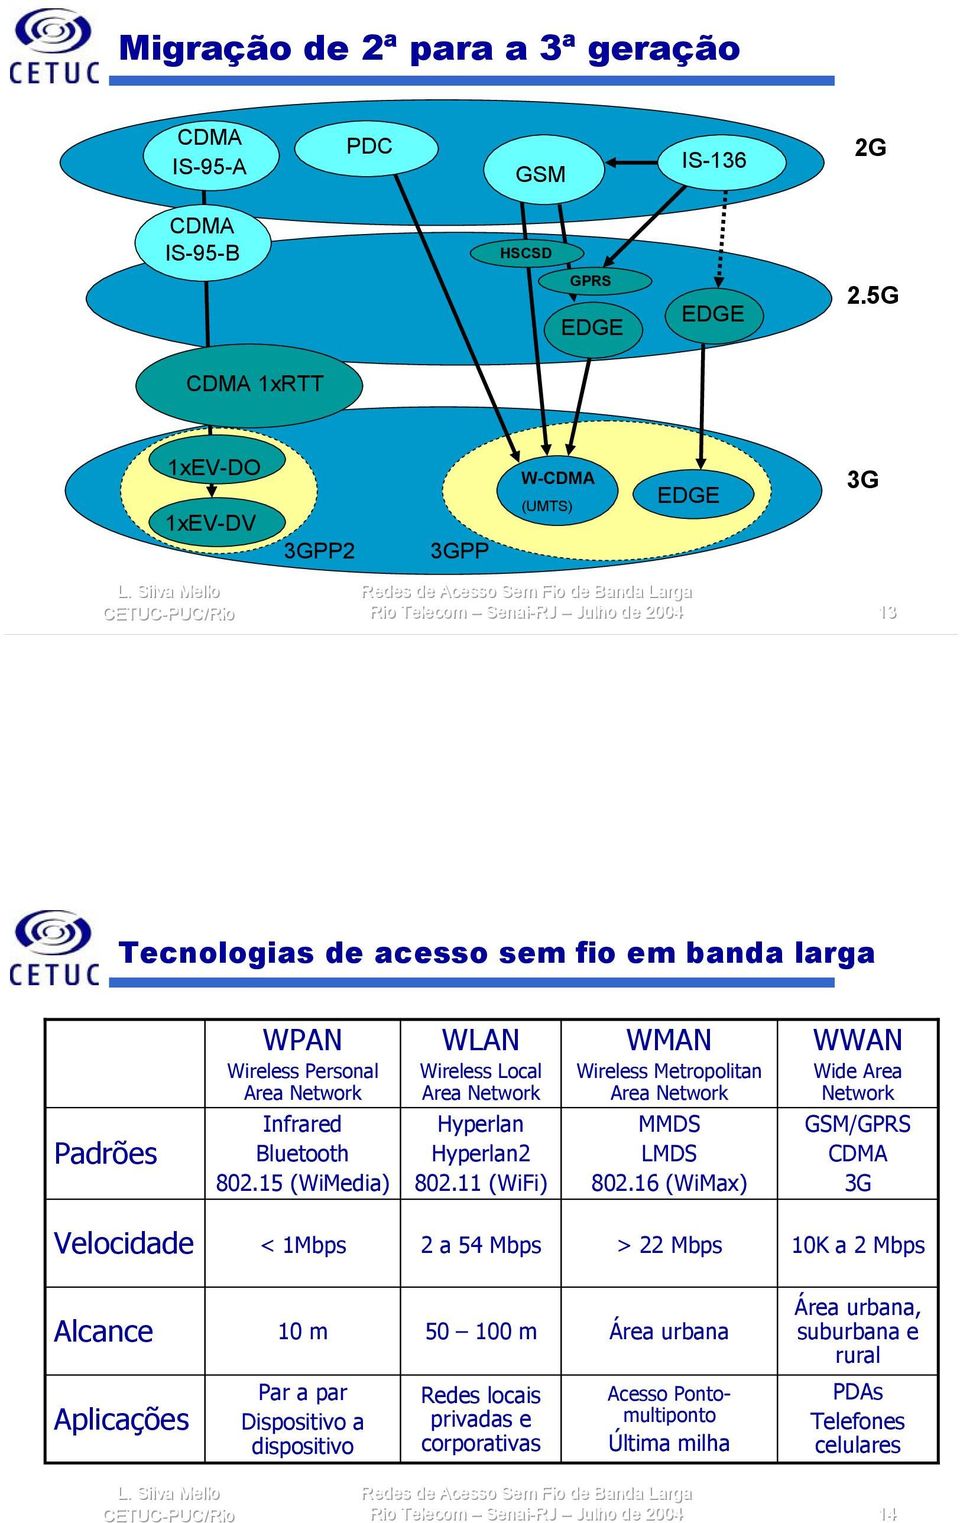 802.15 (WiMedia) WLAN Wireless Local Area Network Hyperlan Hyperlan2 802.11 (WiFi) WMAN Wireless Metropolitan Area Network MMDS LMDS 802.